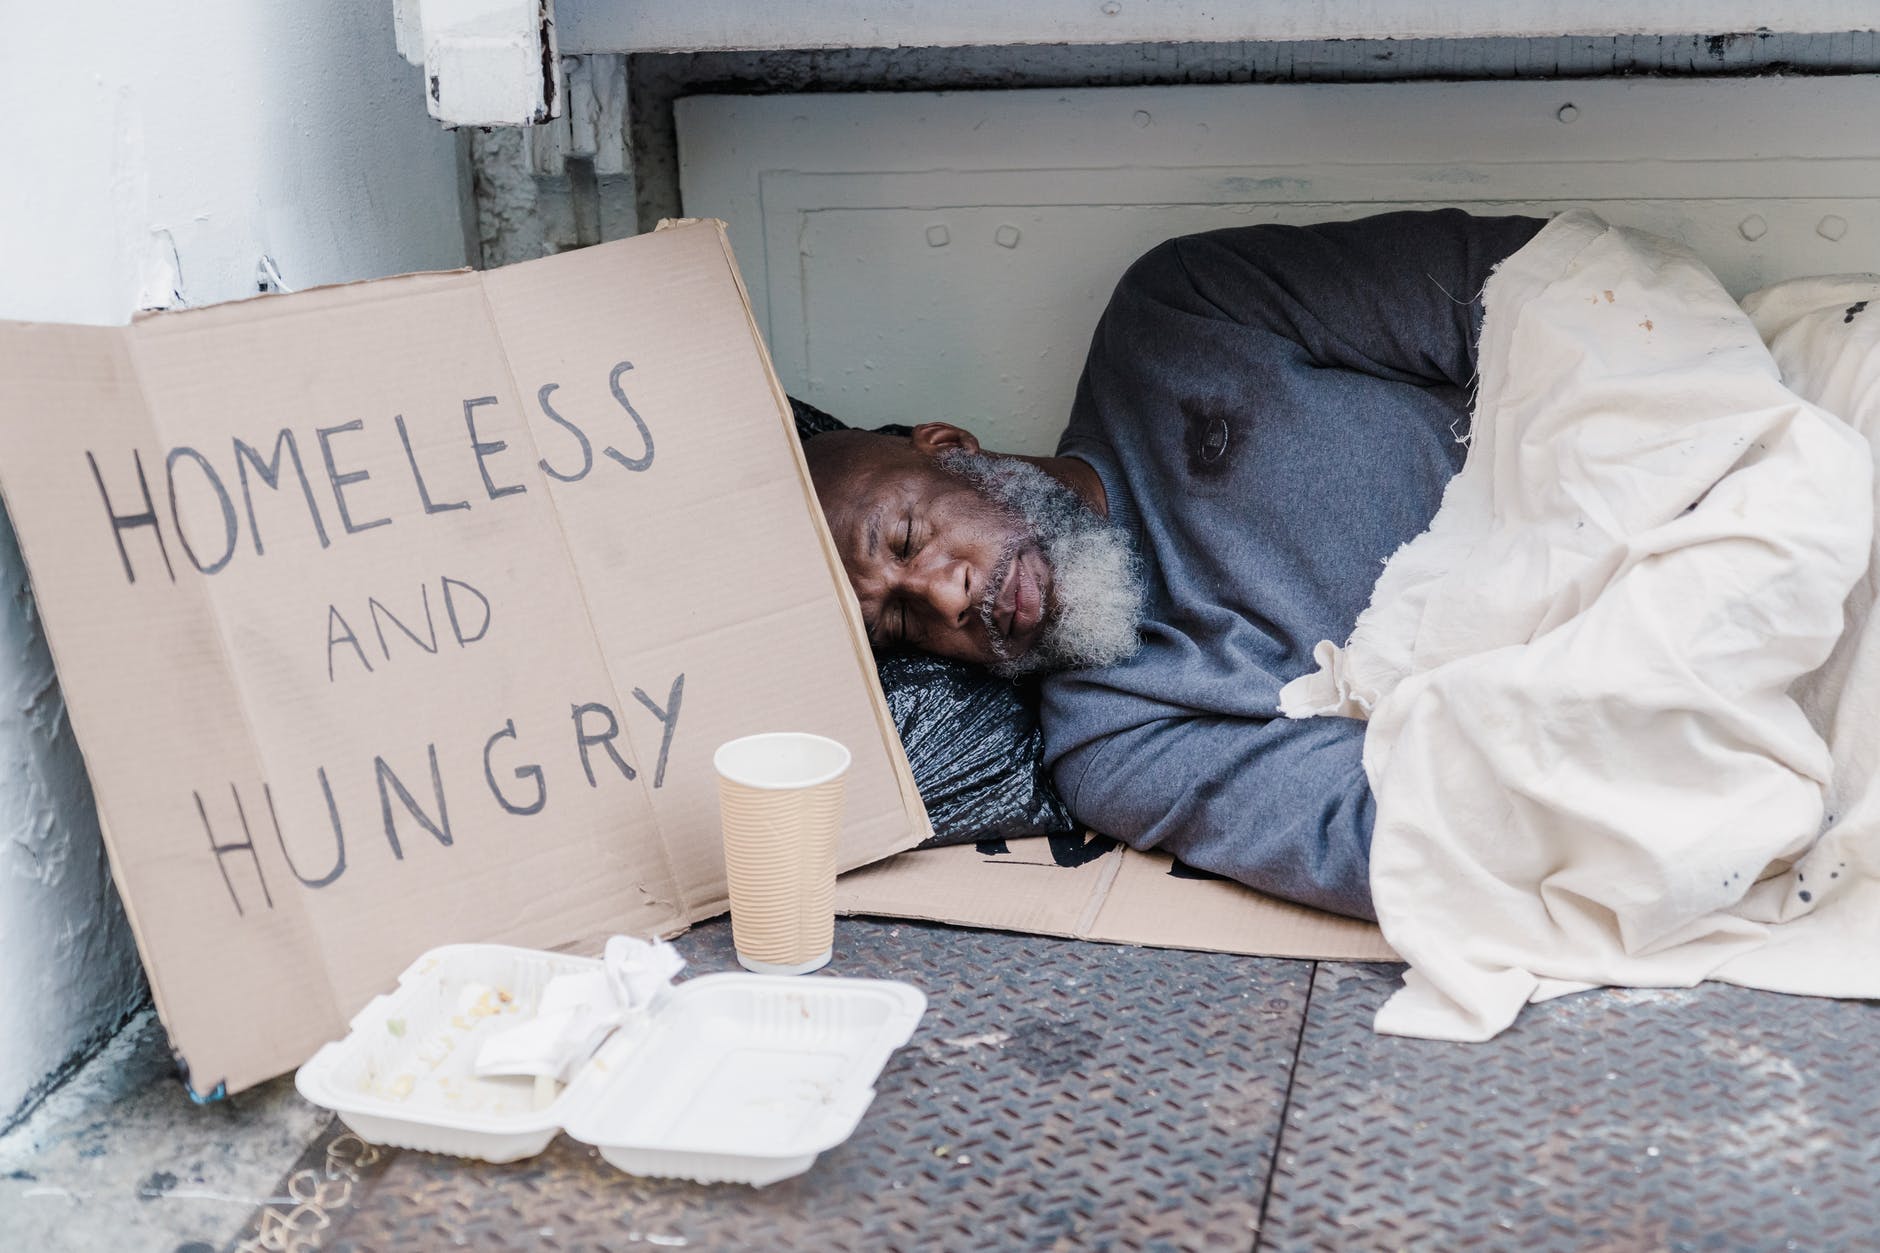 Ashamed to be british photo of a homeless man sleeping near a cardboard sign.